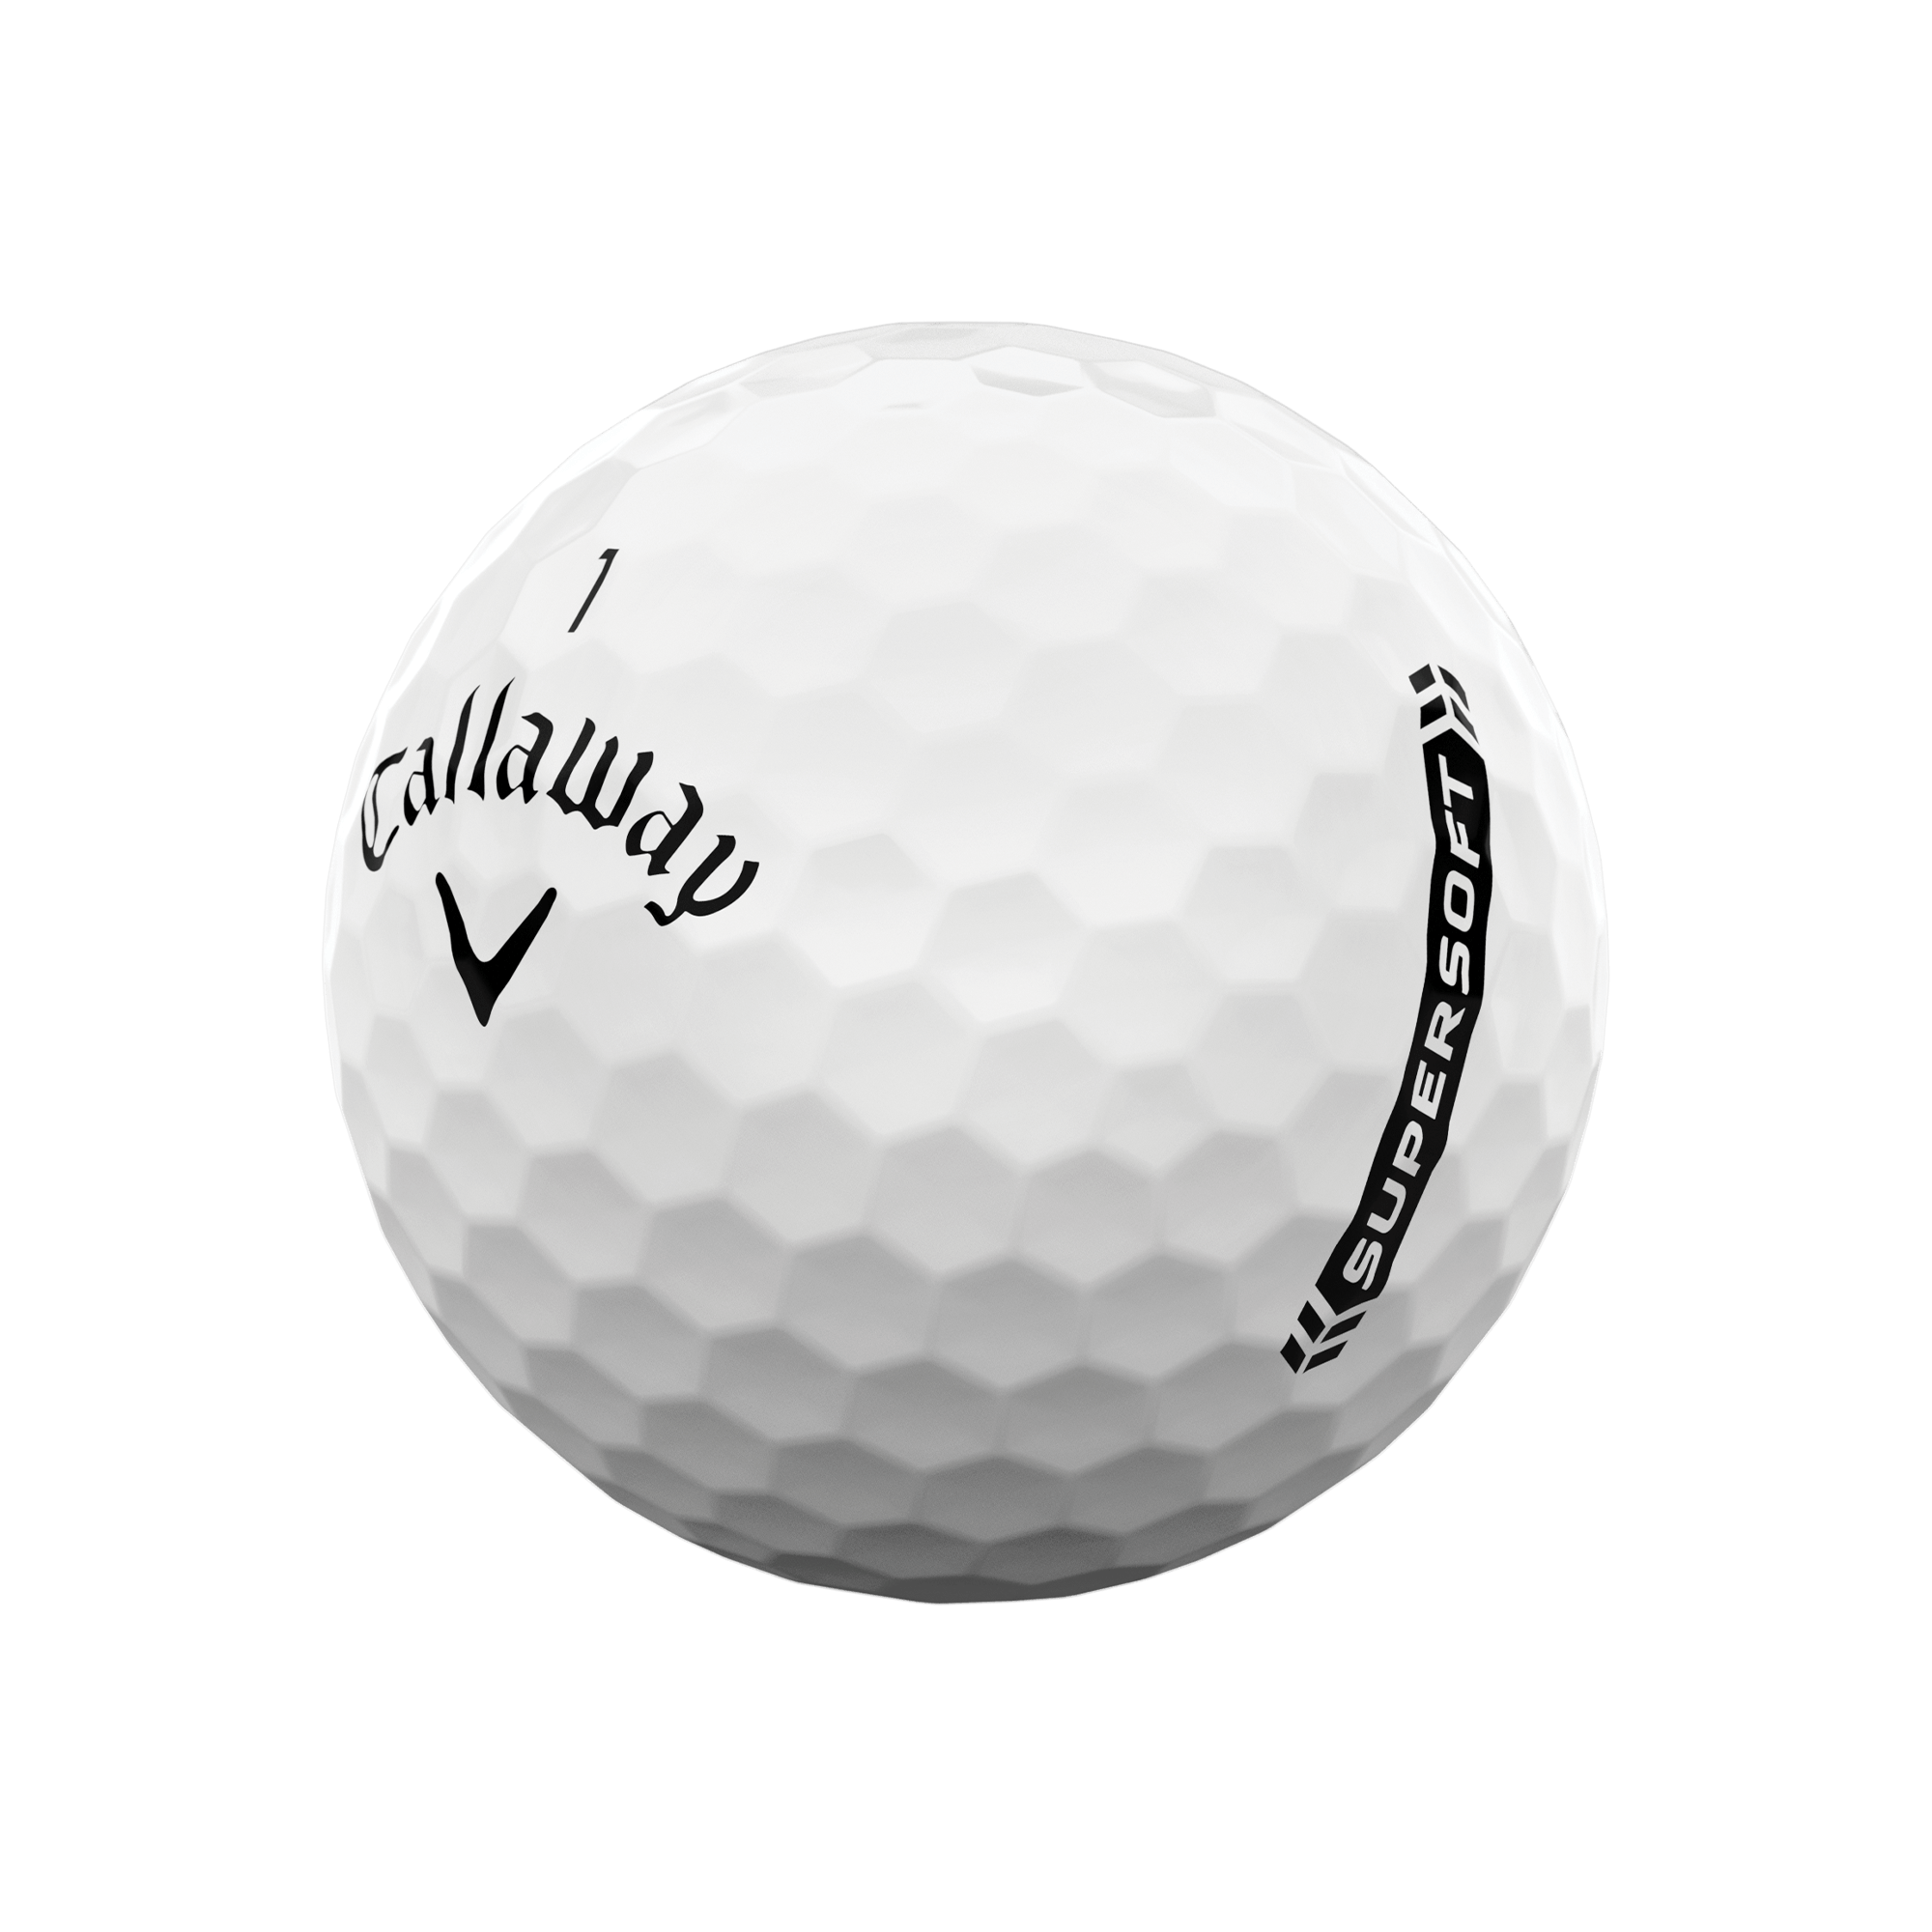 Callaway Supersoft White, Golf Balls